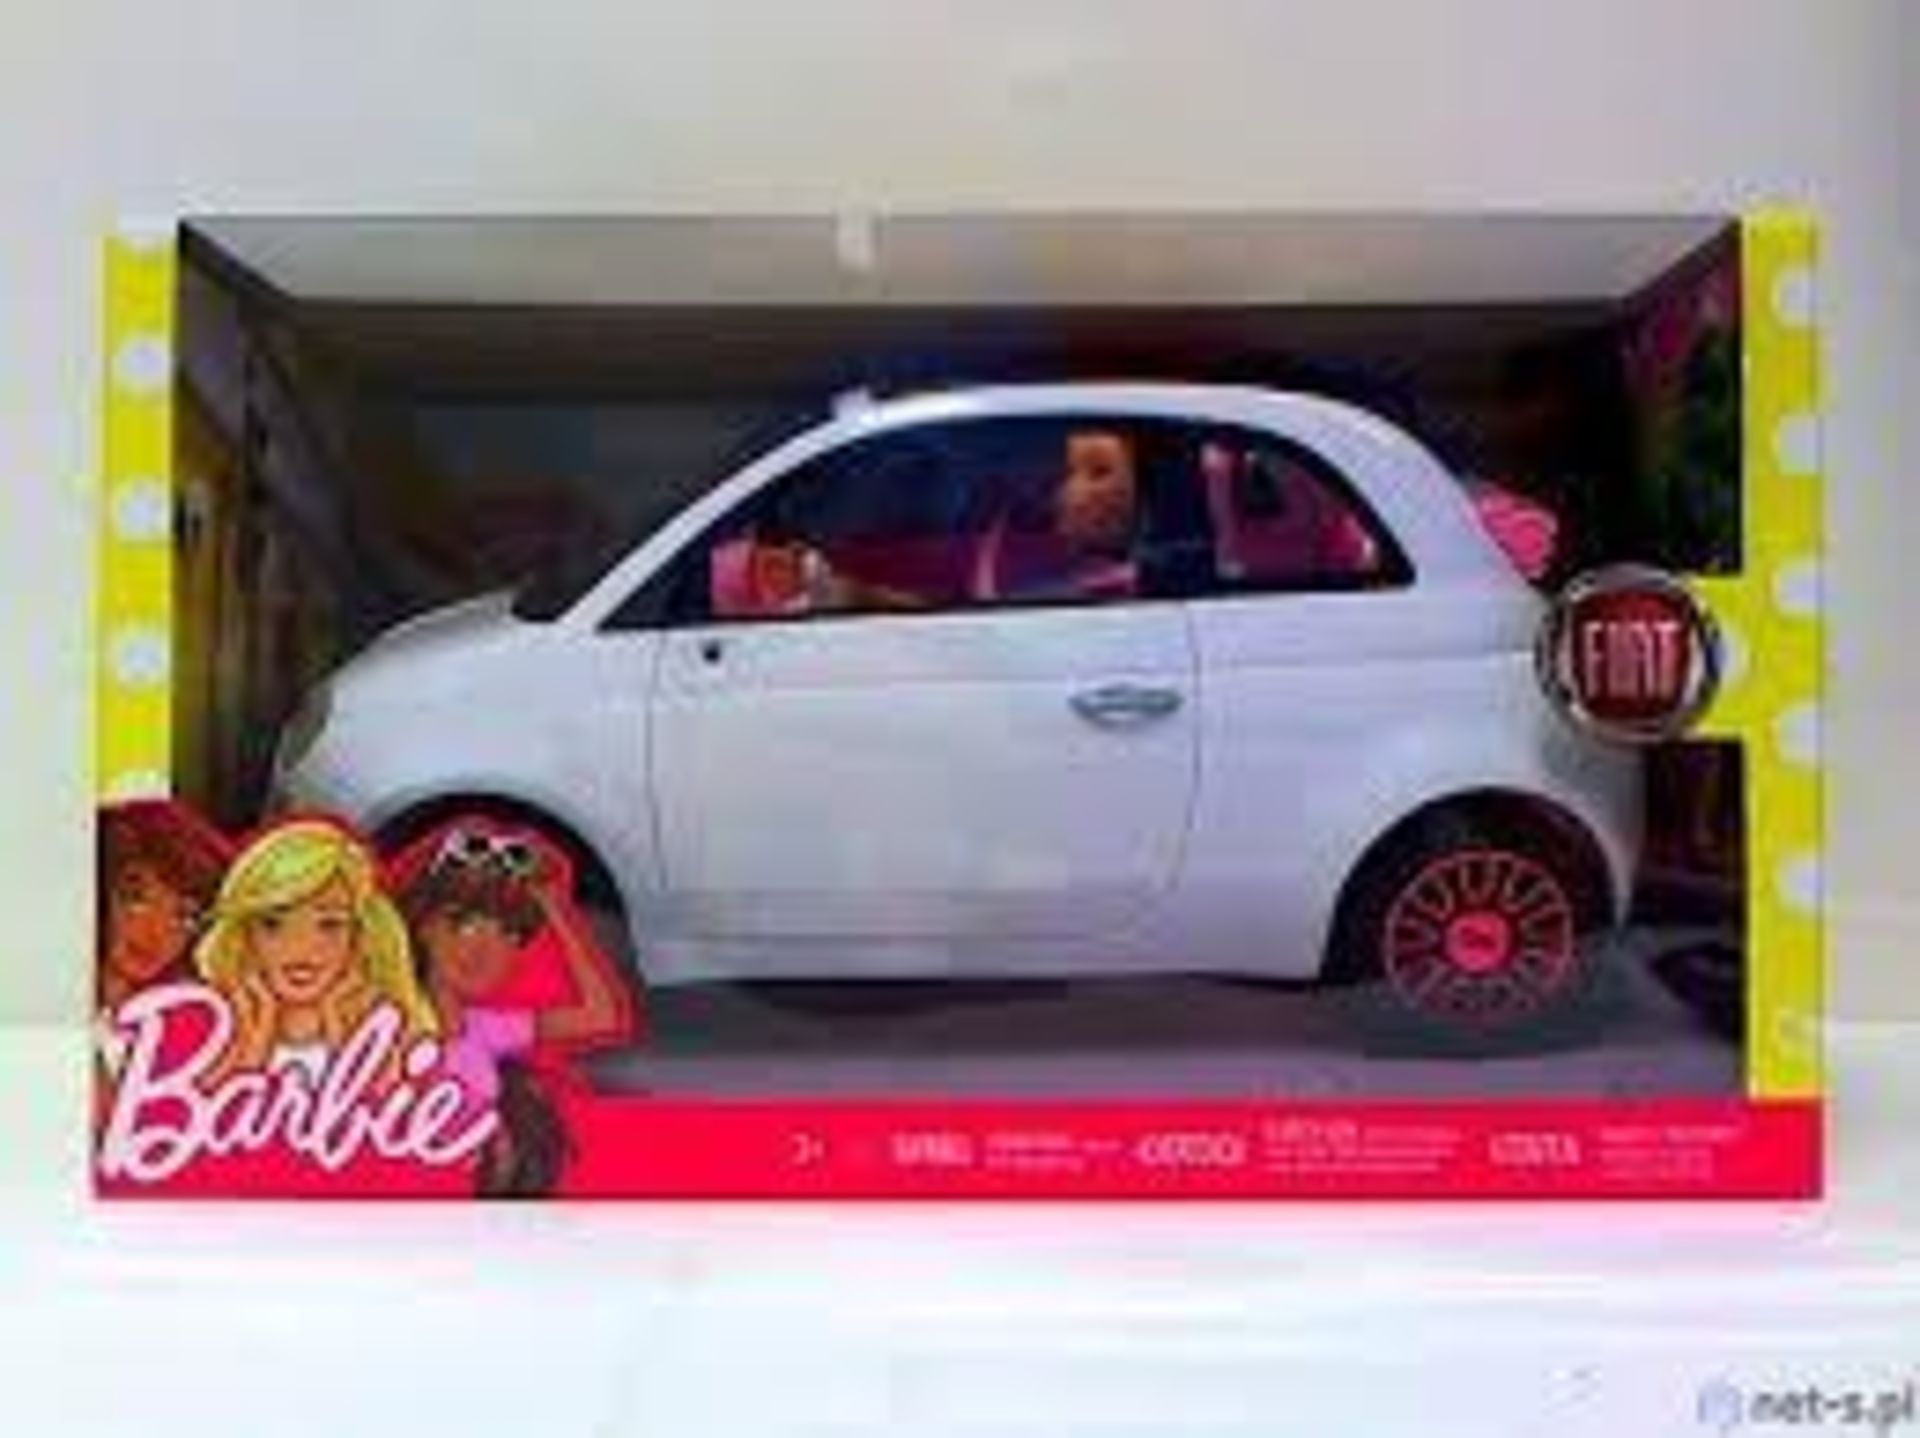 Mattel "Spain" Barbie Doll Car Fiat (Multi-Coloured)(Limited Edition) - £85.00 RRP